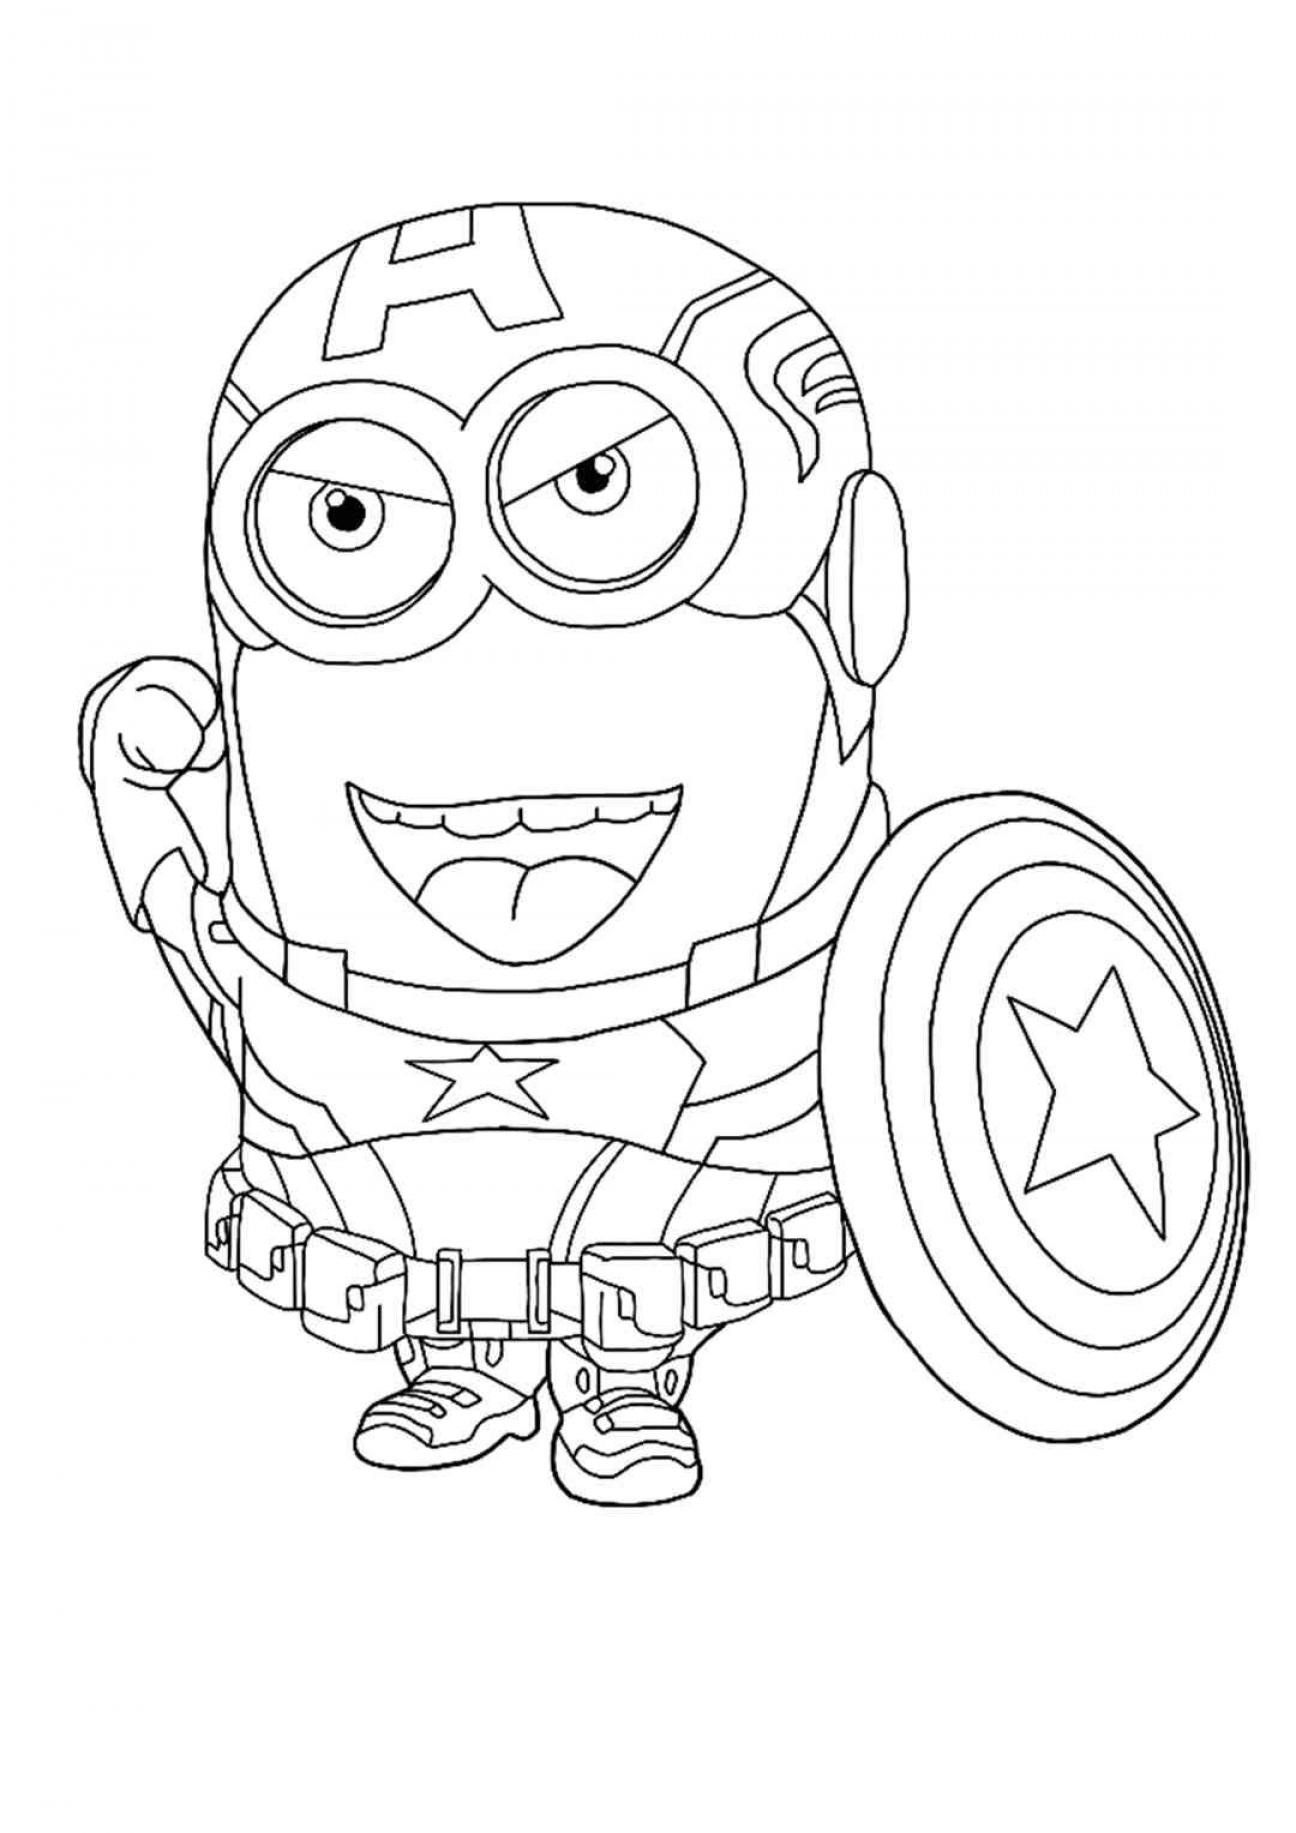 Minion Captain America coloring pages Free Printable - SheetalColor.com